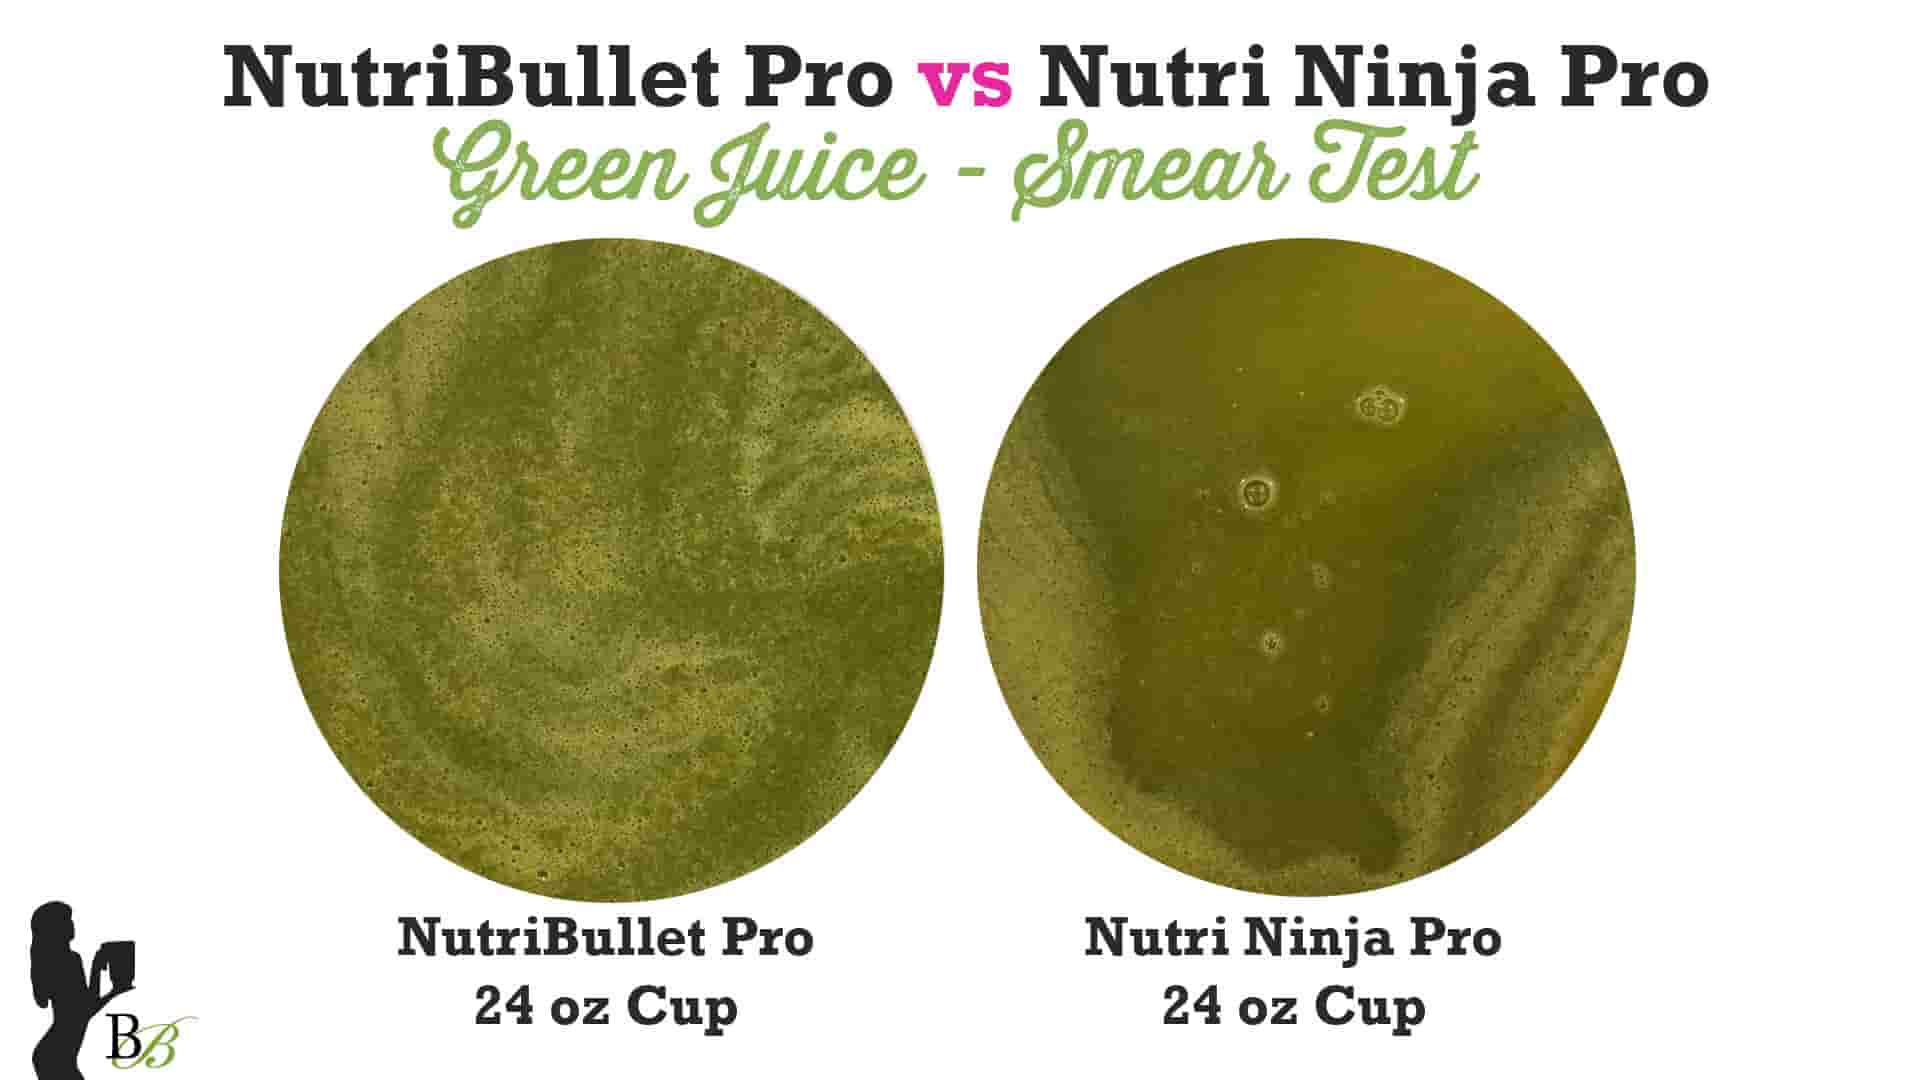 NutriBullet Pro vs Nutri Ninja Pro Smear Test